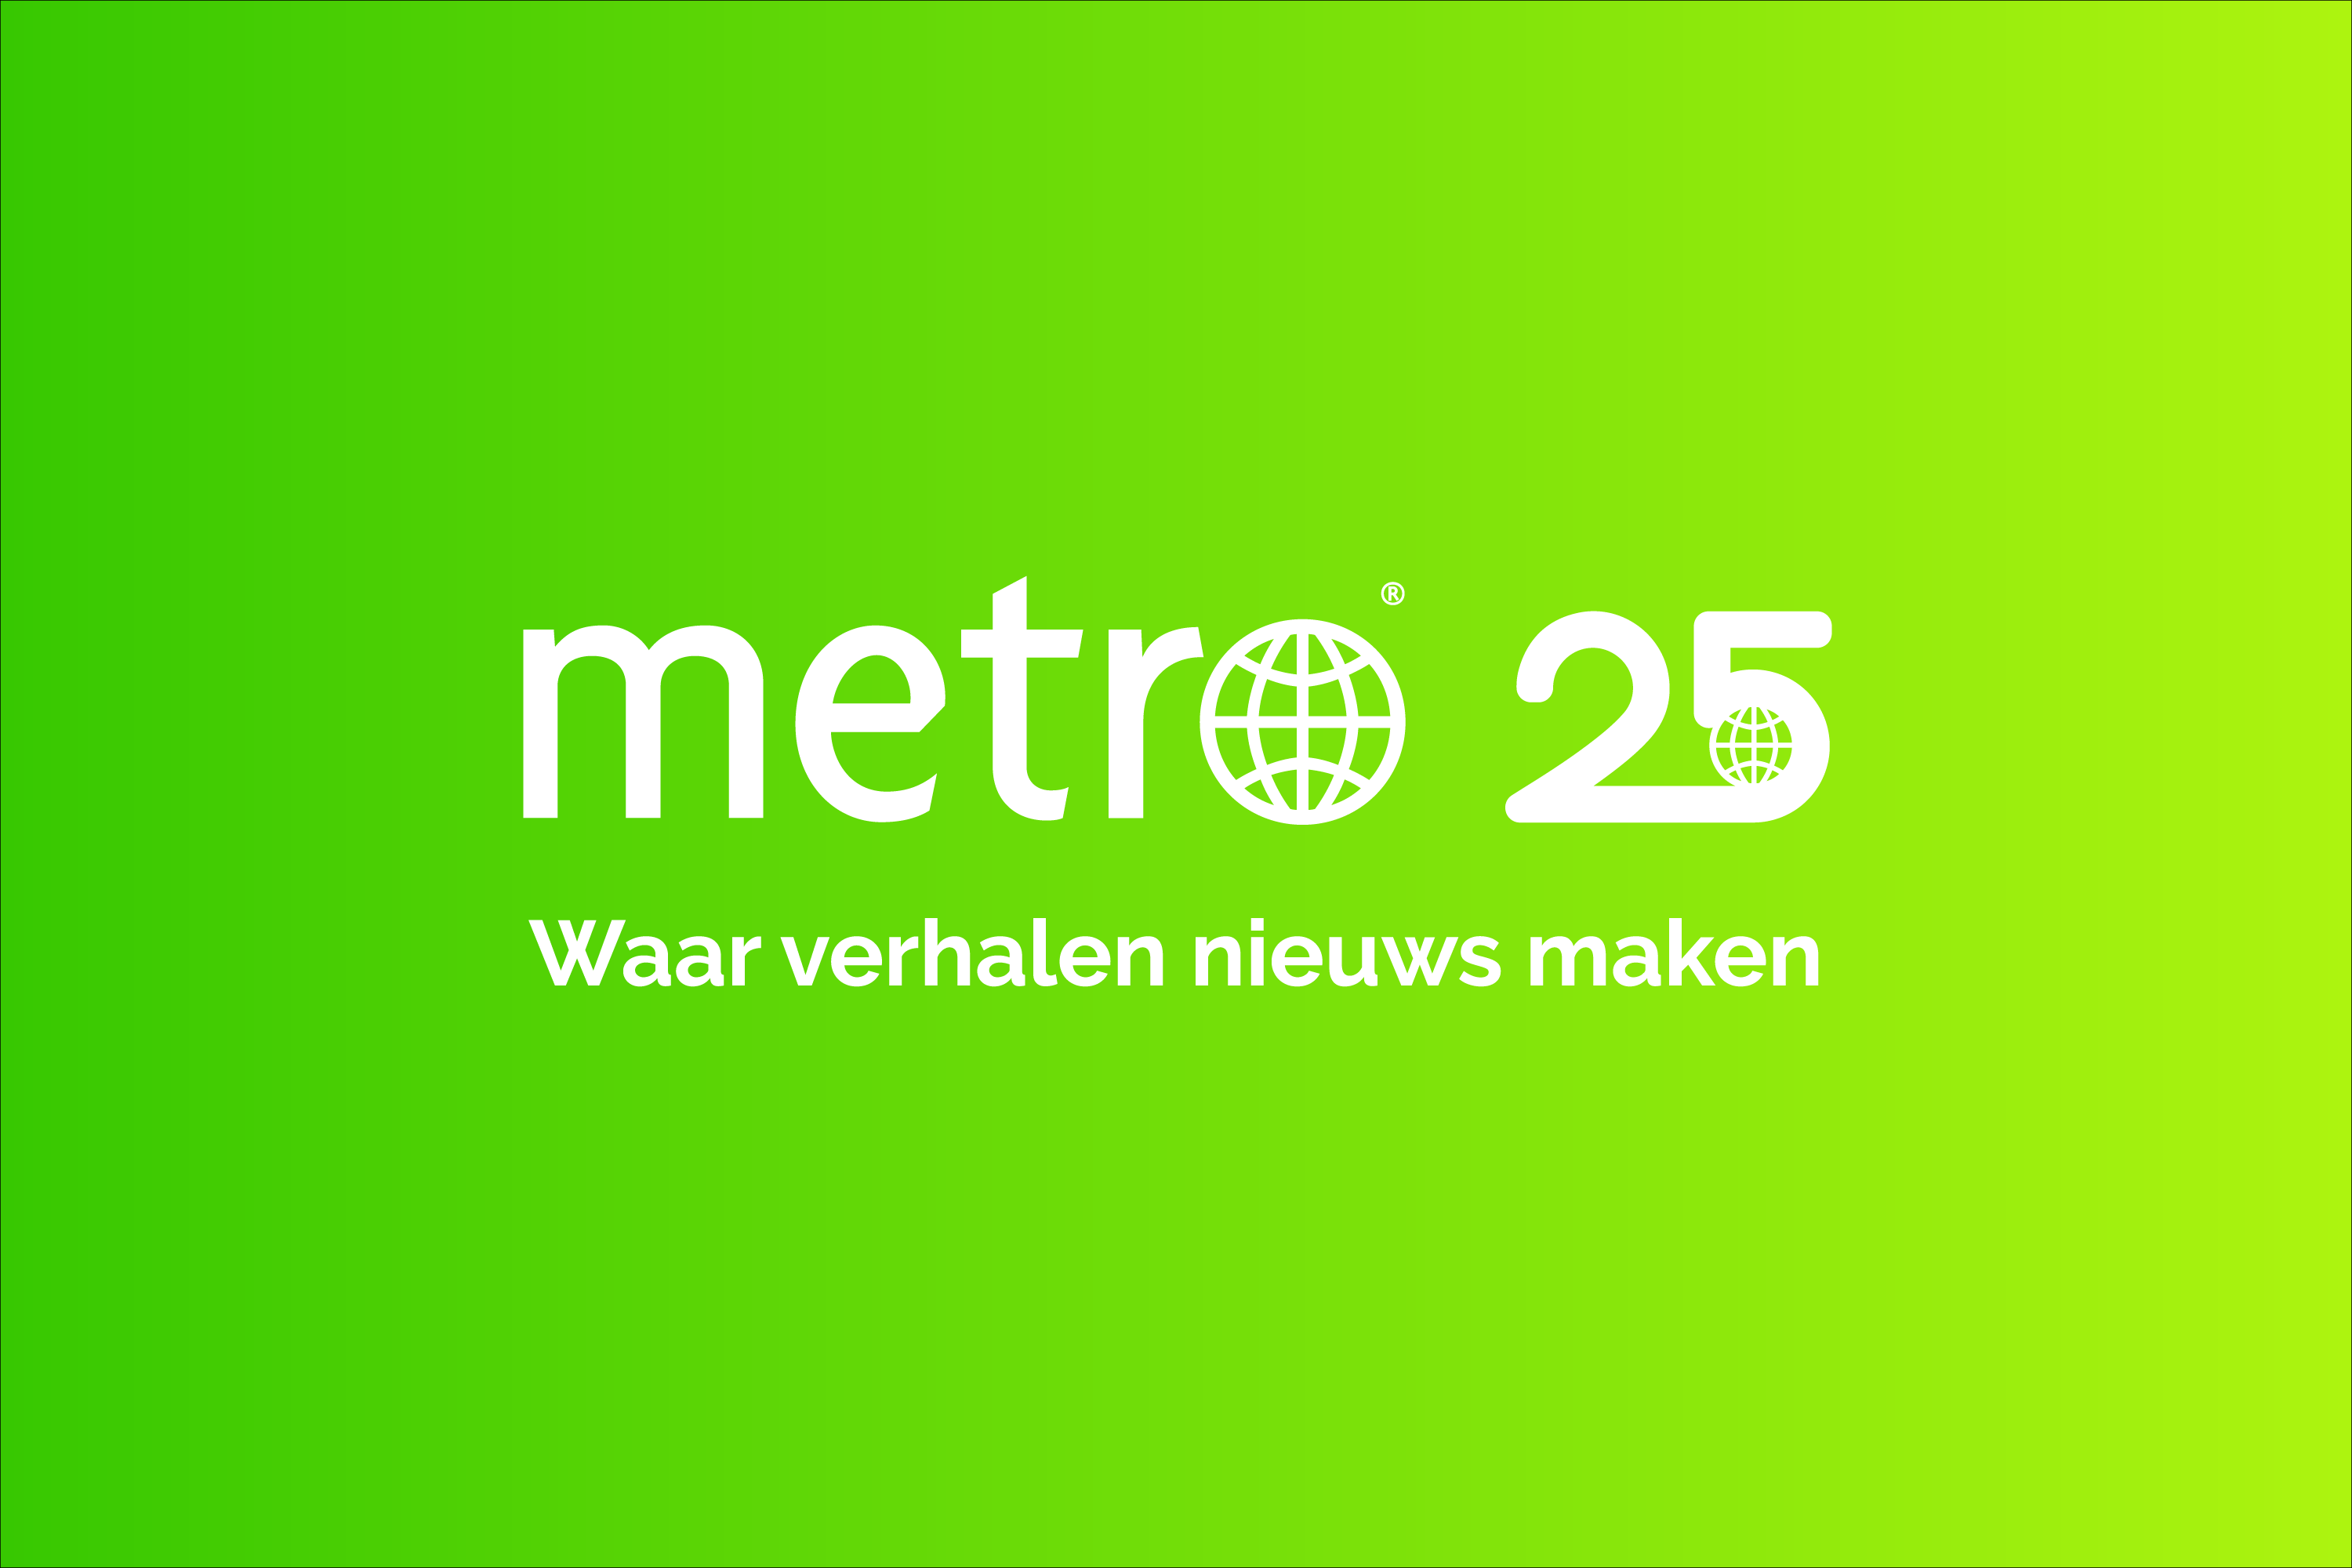 Metro viert jubiluem met nieuwe tagline 